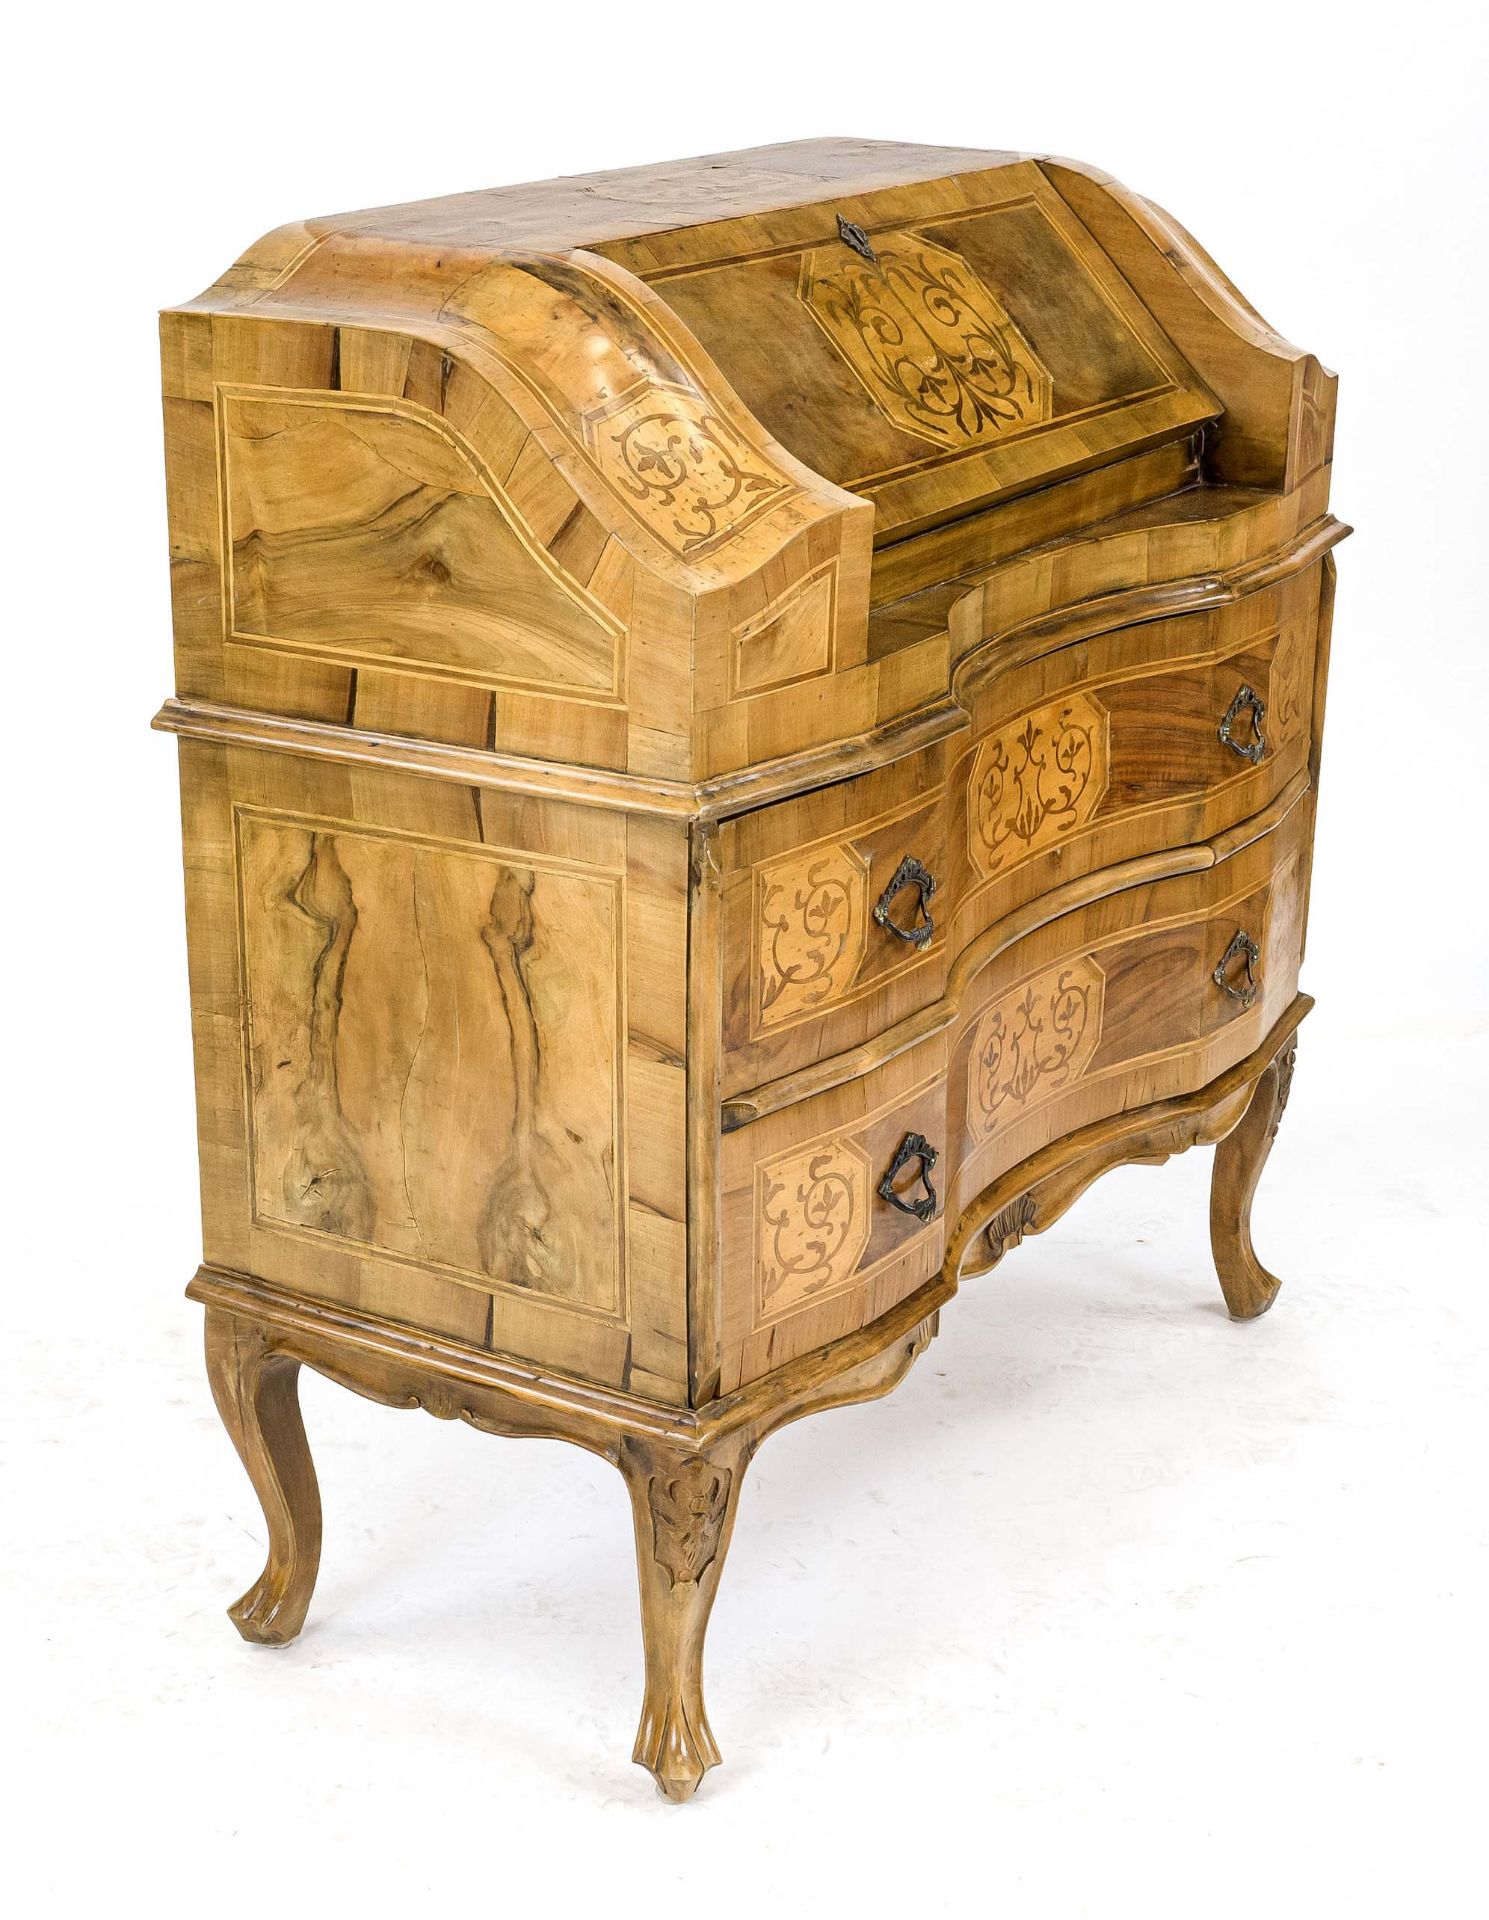 Baroque-style ladies' secretary, 20th century, walnut veneered and inlaid, two drawers, 4 drawers - Image 3 of 3